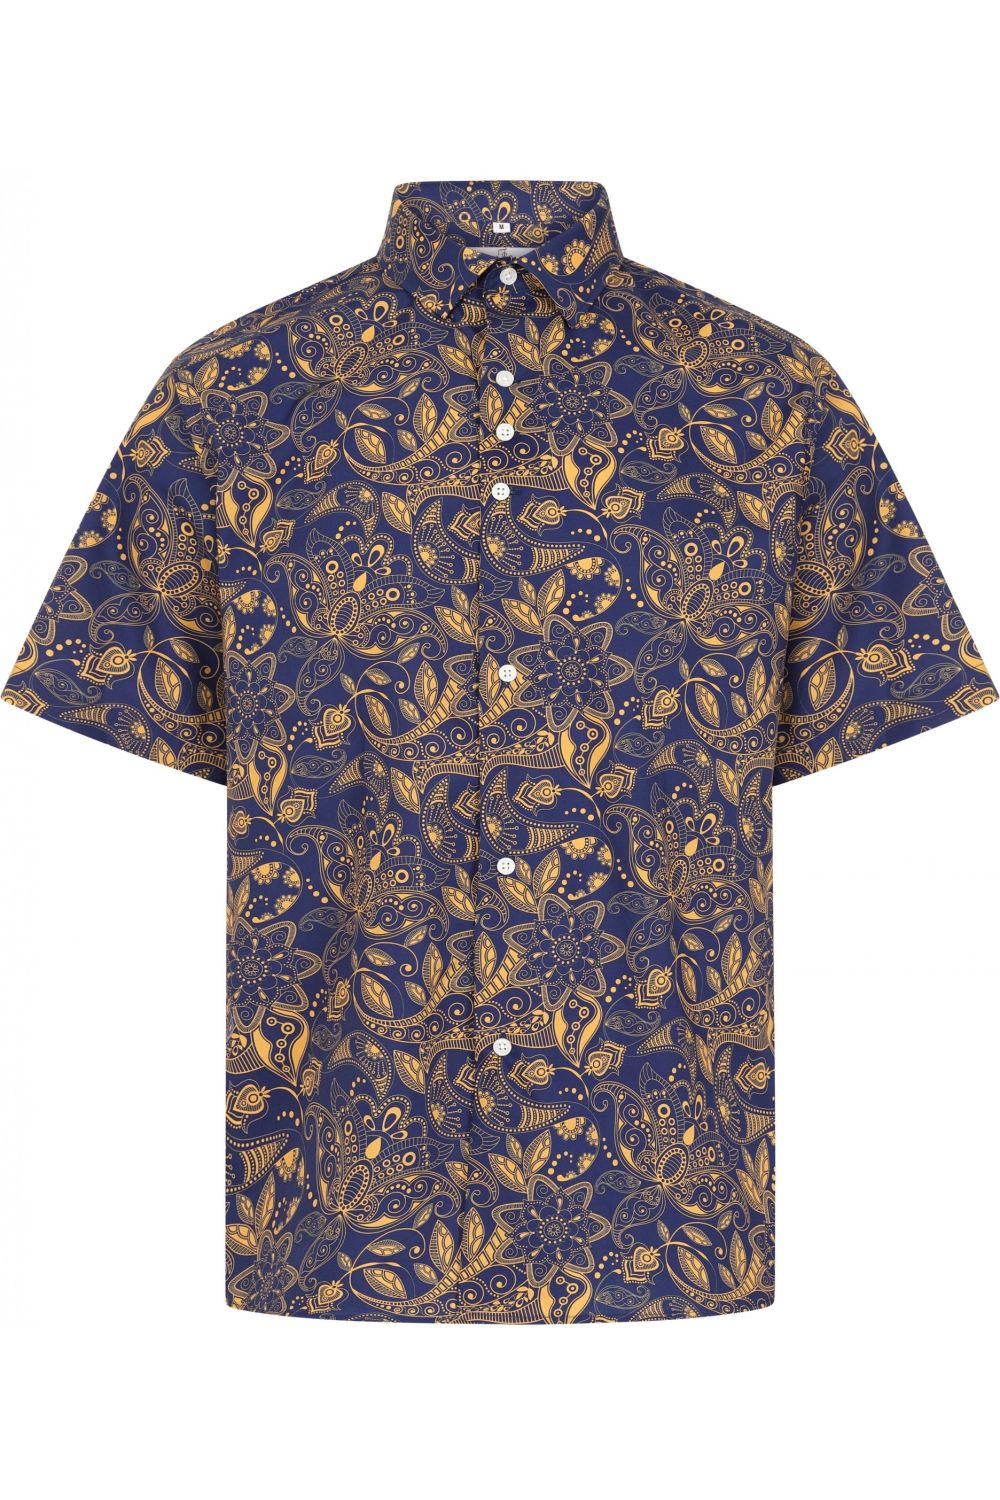 Navy & Gold Paisley Floral Short Sleeve Shirt